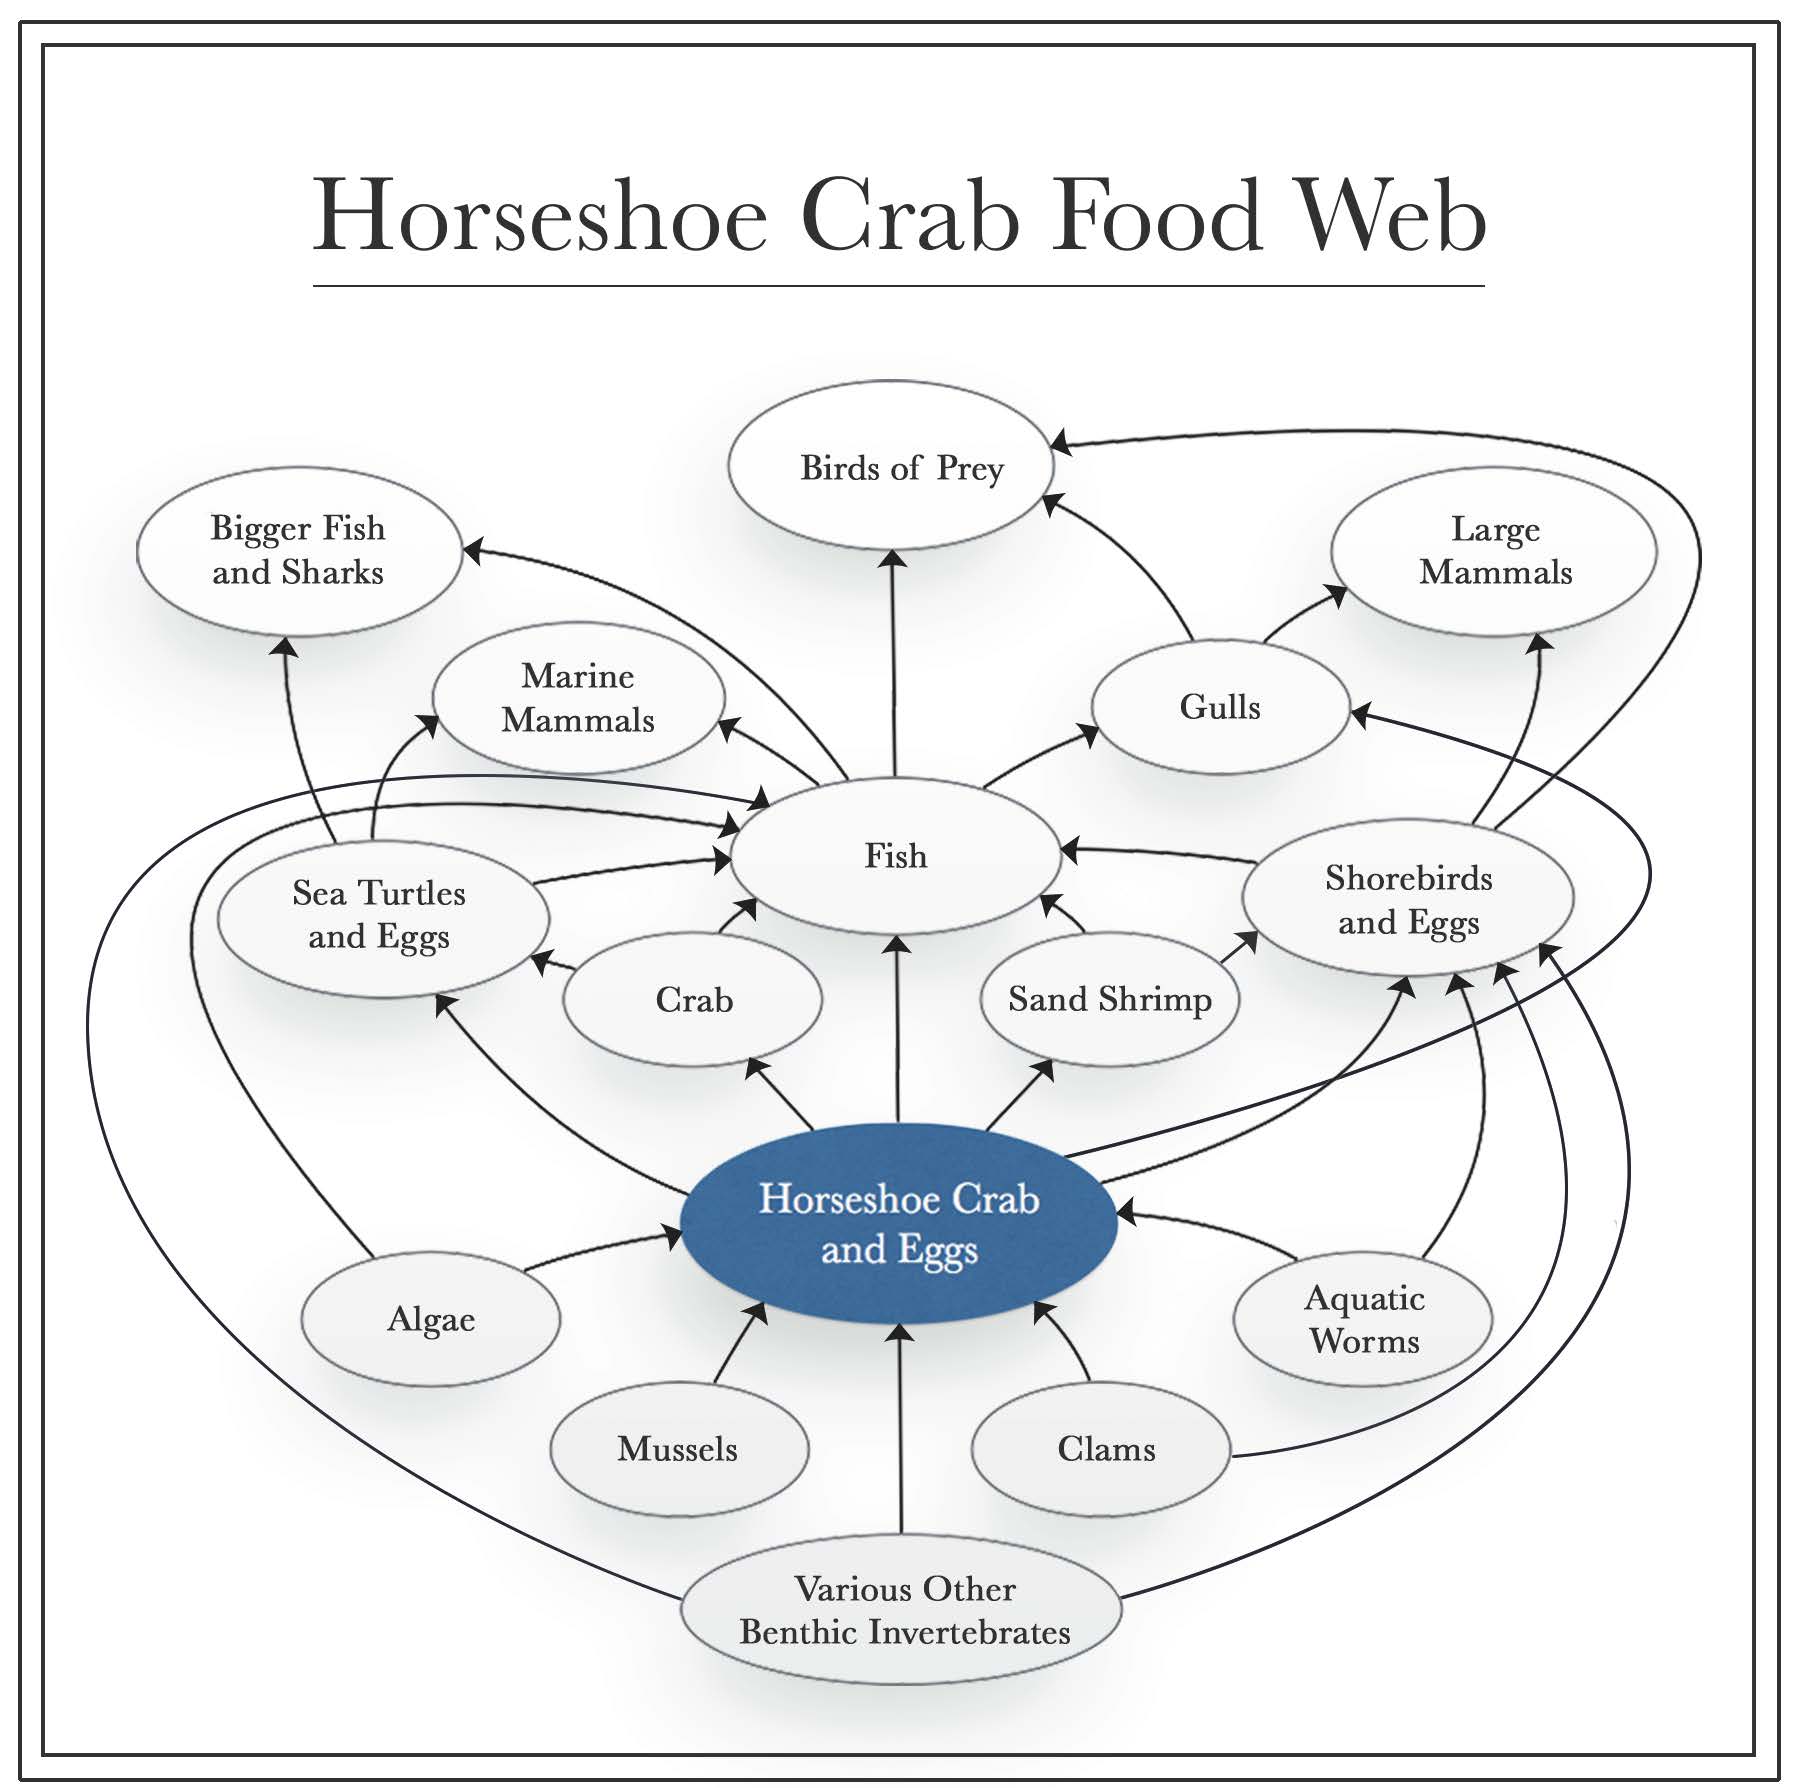 Horseshoe Crab Food Web